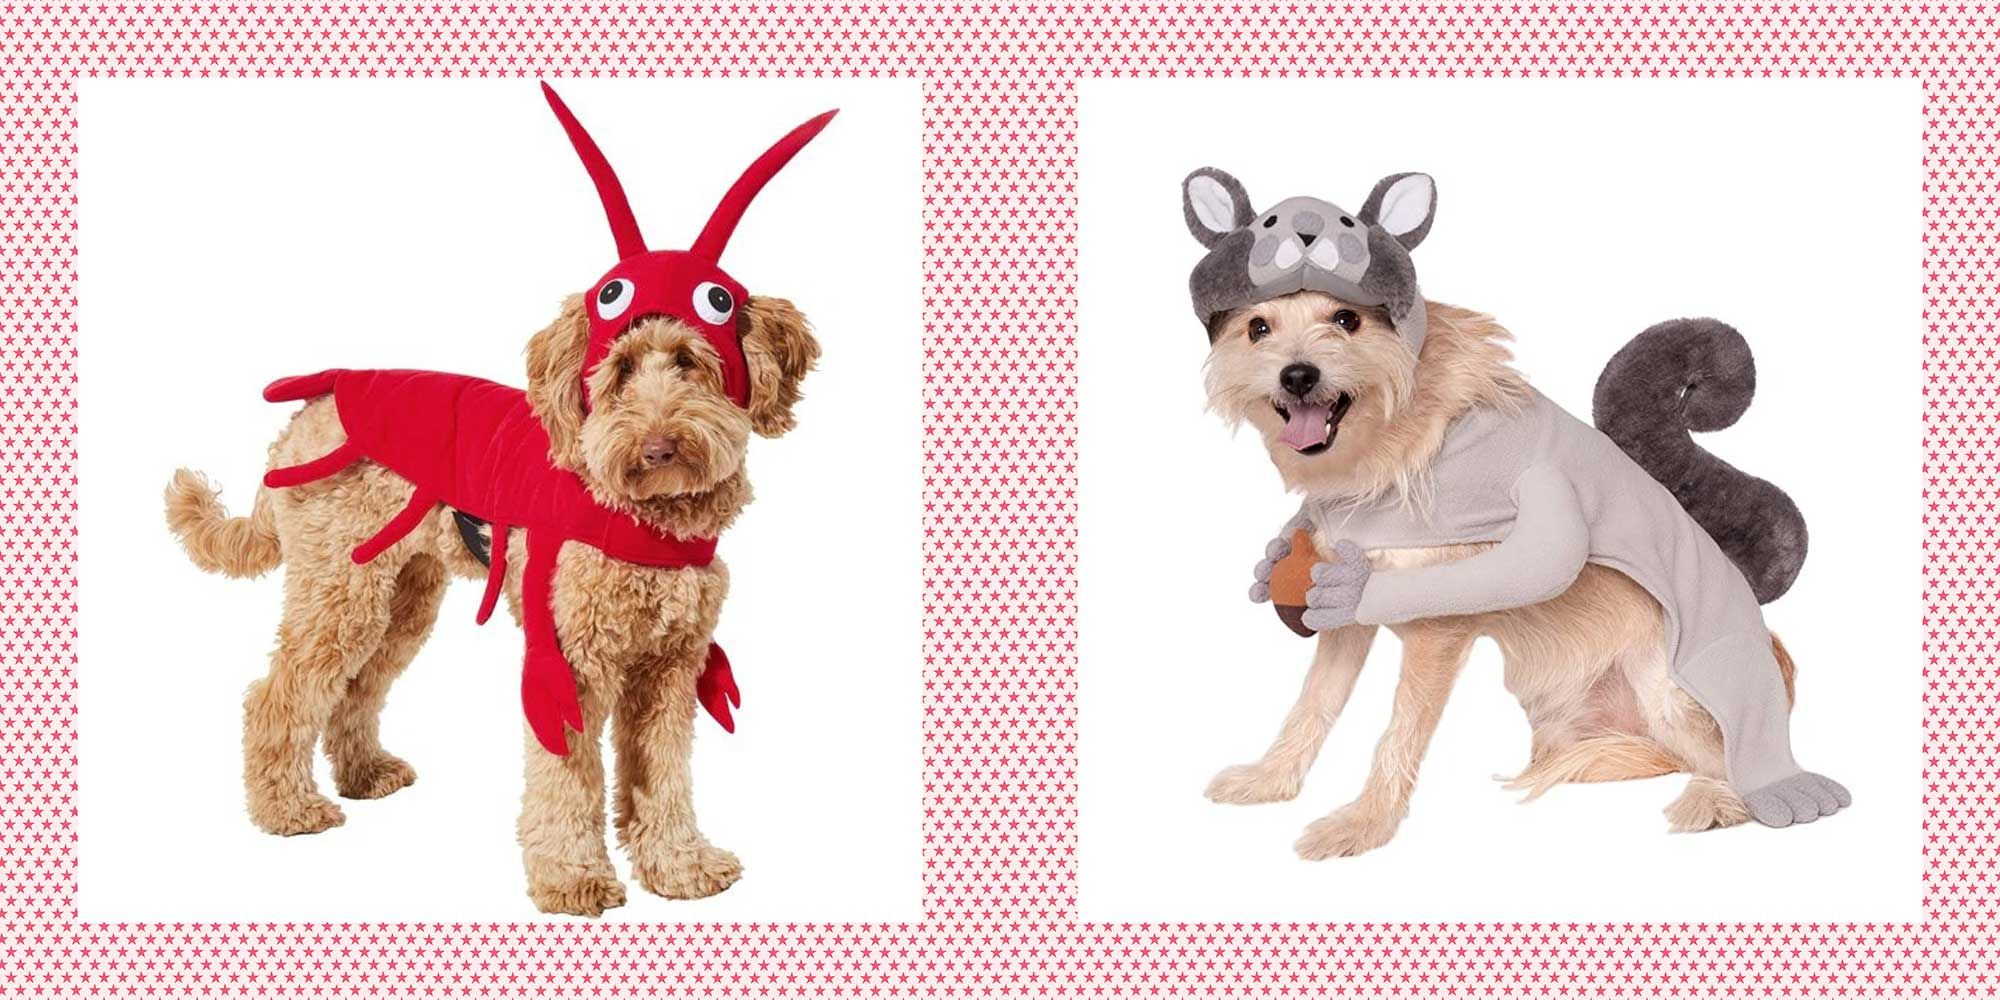 Dog Spider Costume: Hilariously Terrifying Halloween Idea